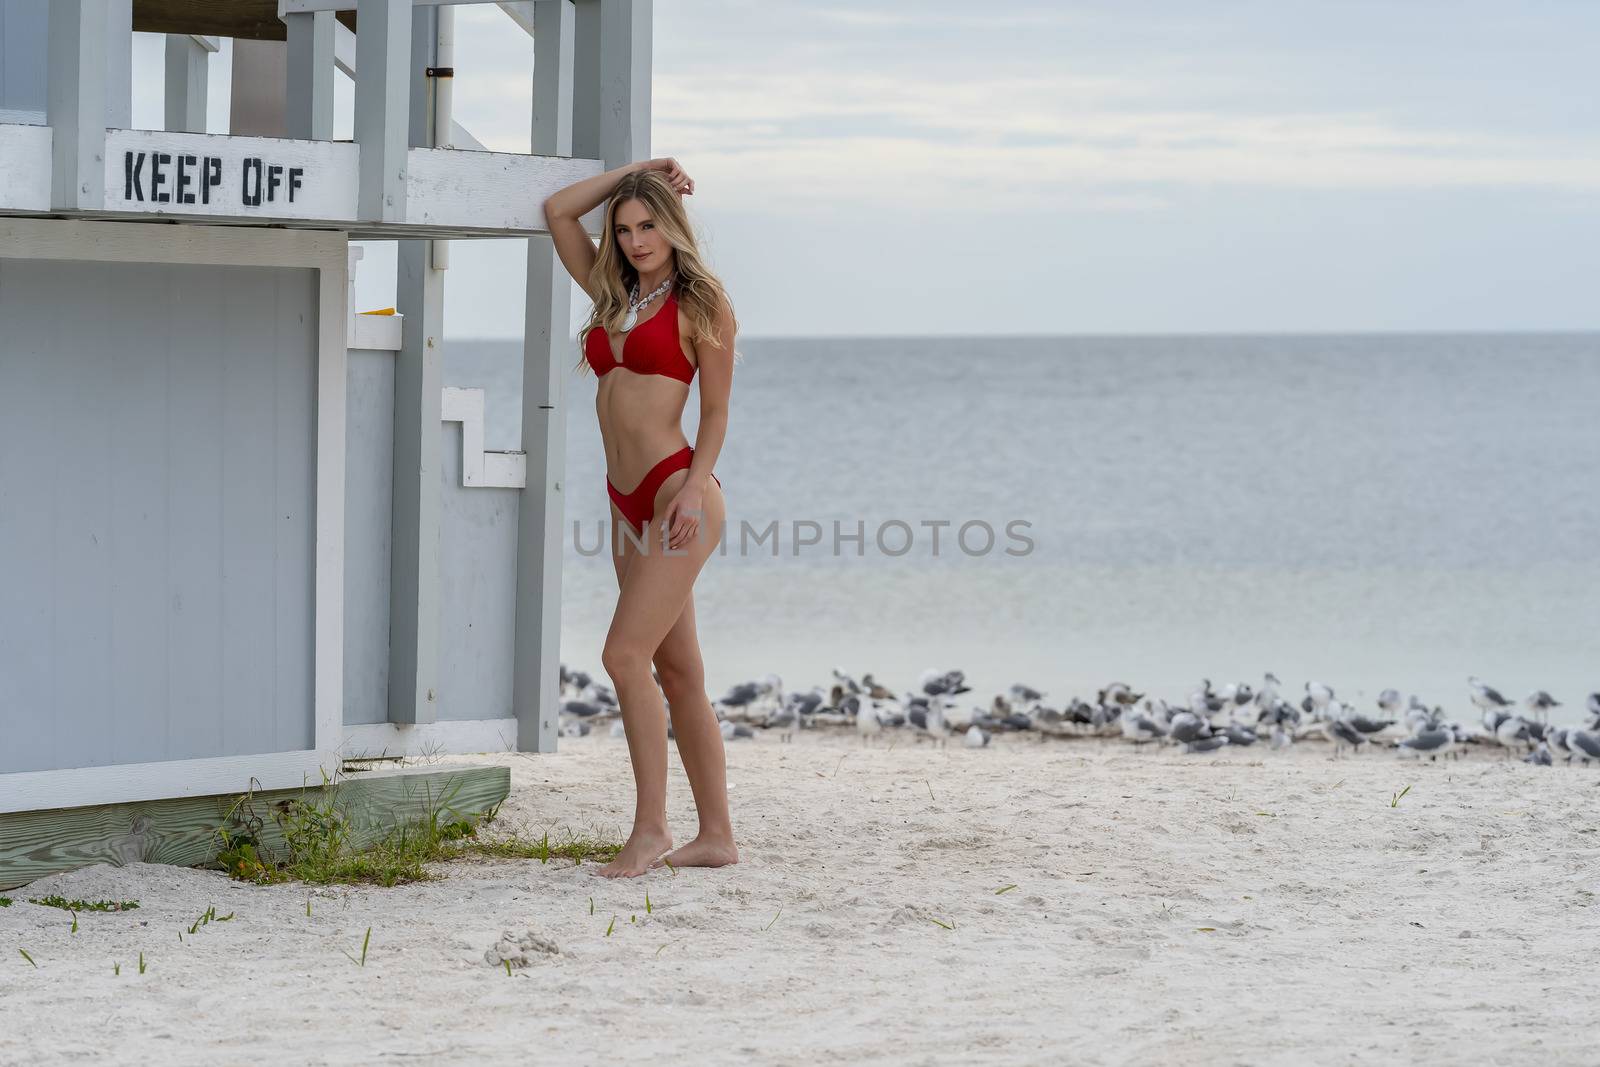 A beautiful blonde bikini model enjoys the weather outdoors on the beach while posing near a lifeguard station